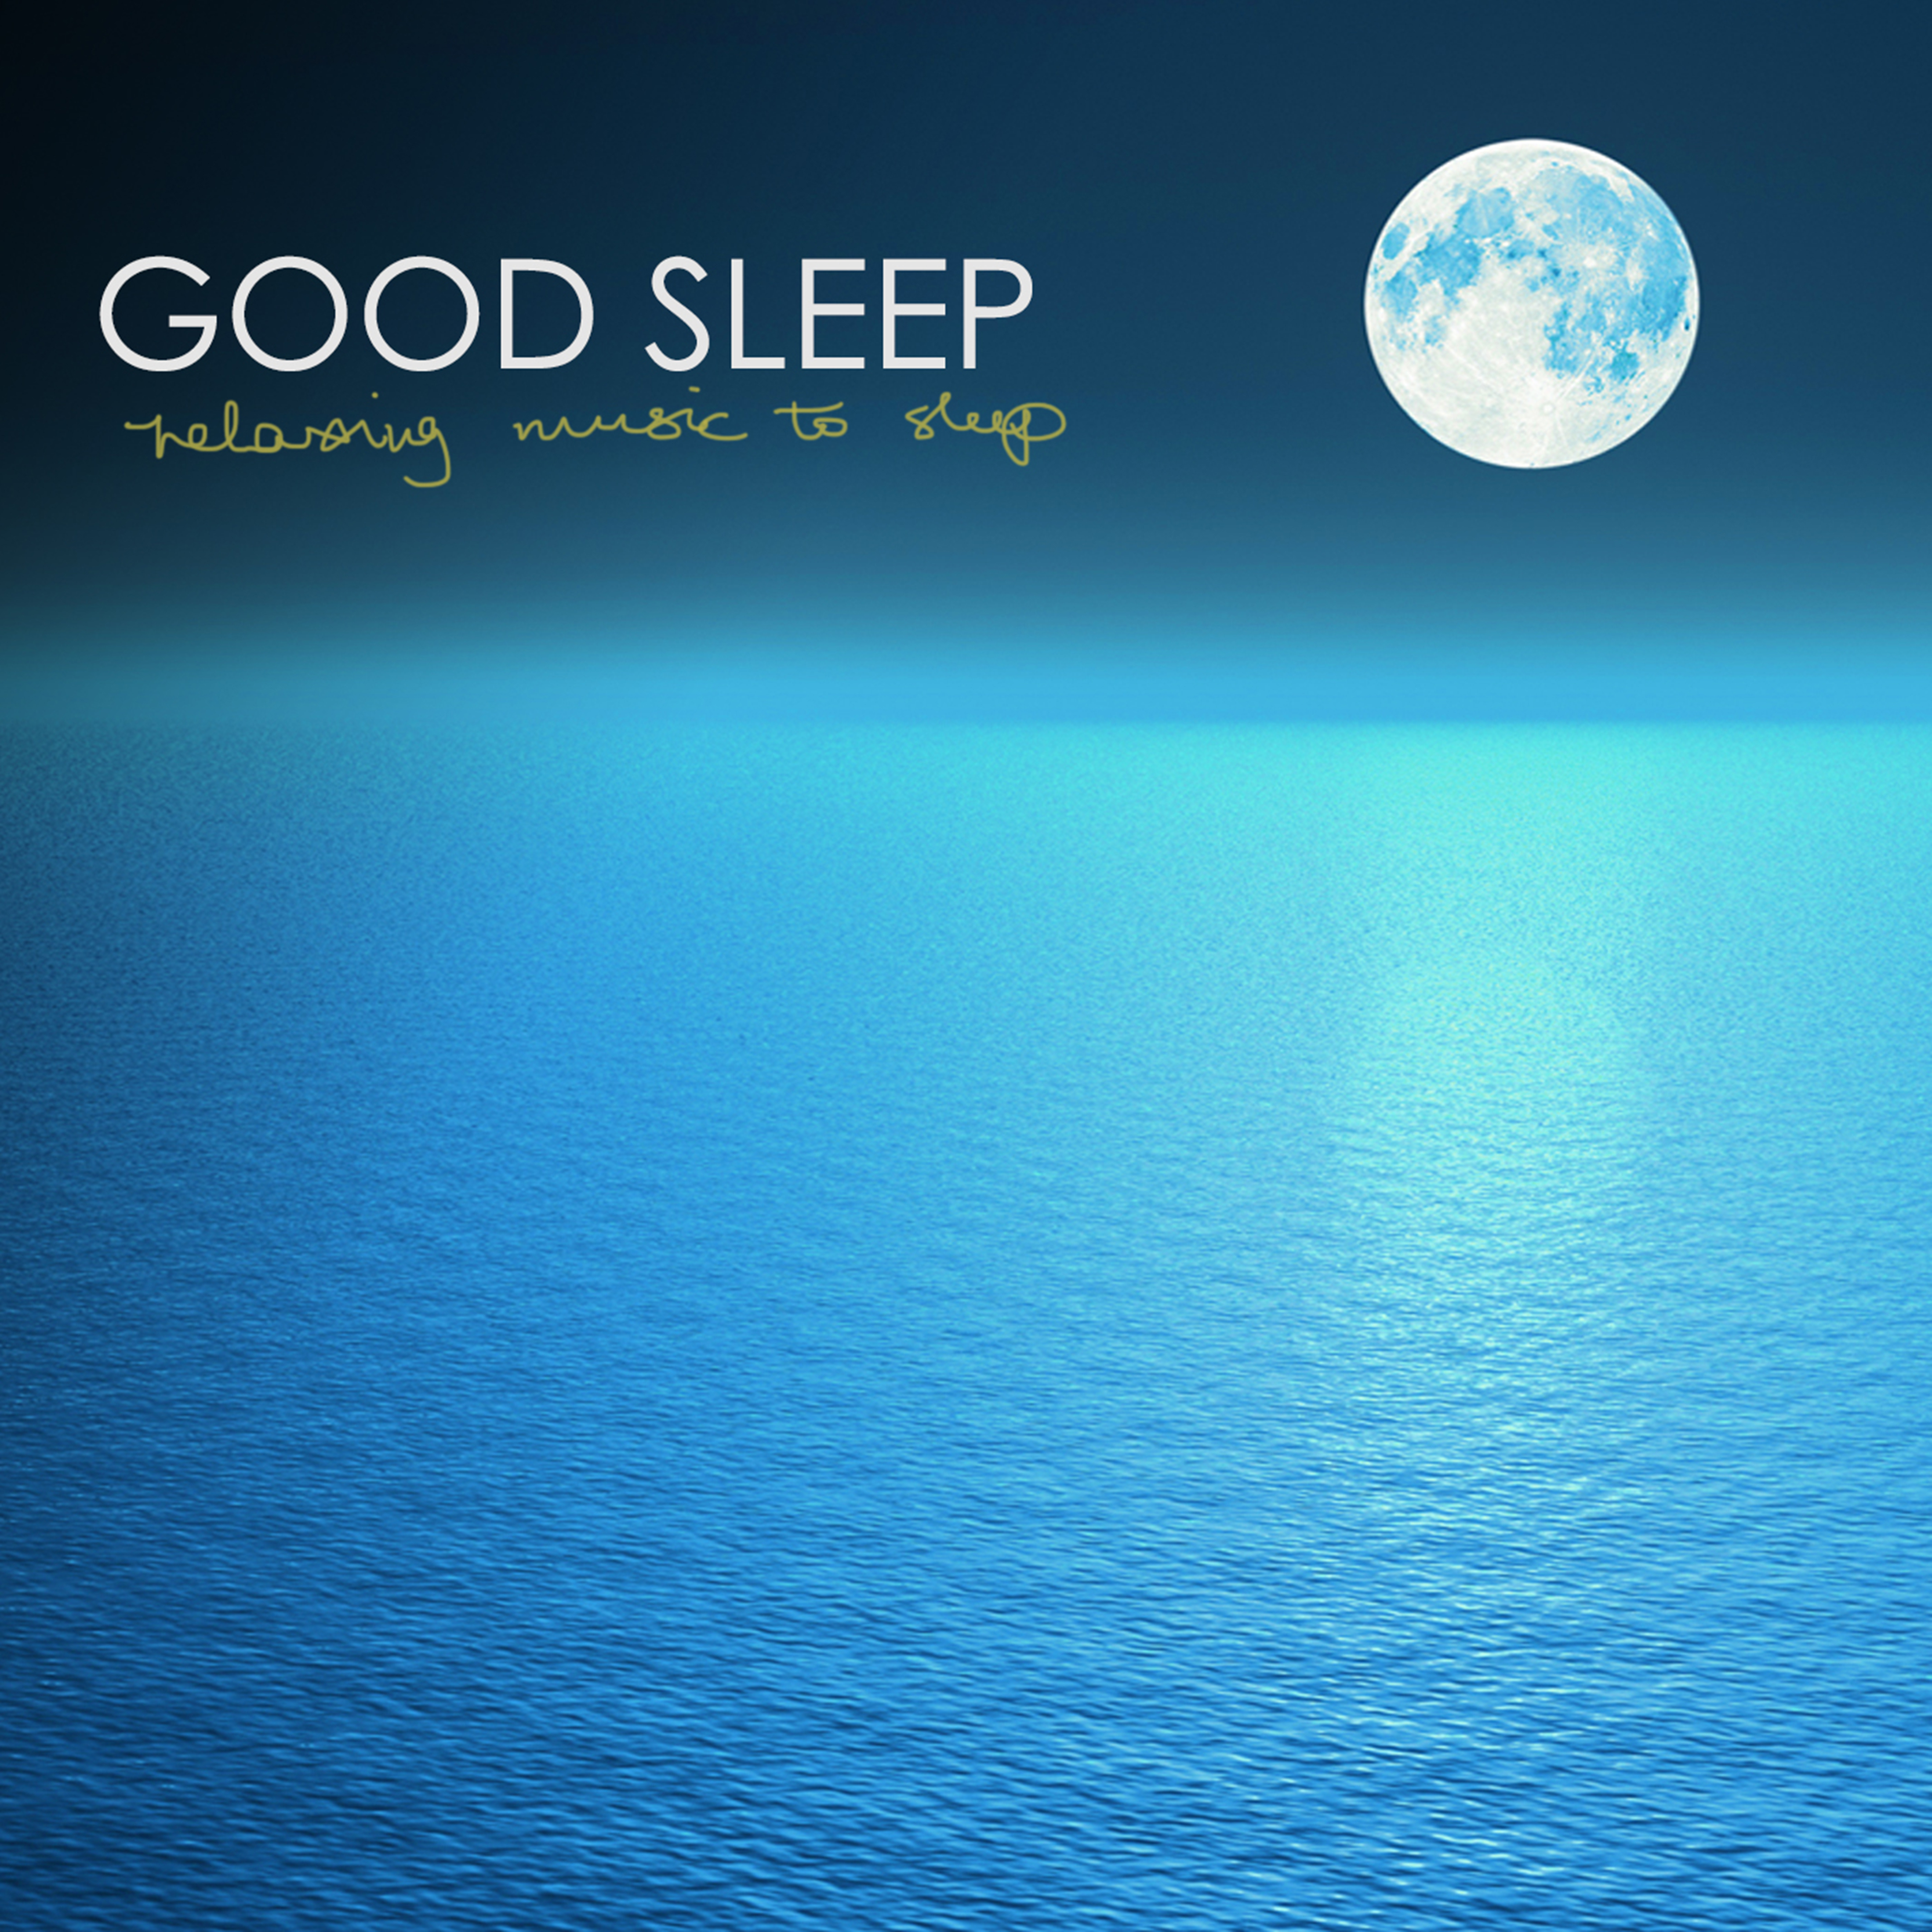 Good Sleep Sounds - Relaxing Music to Sleep & Sounds of Nature